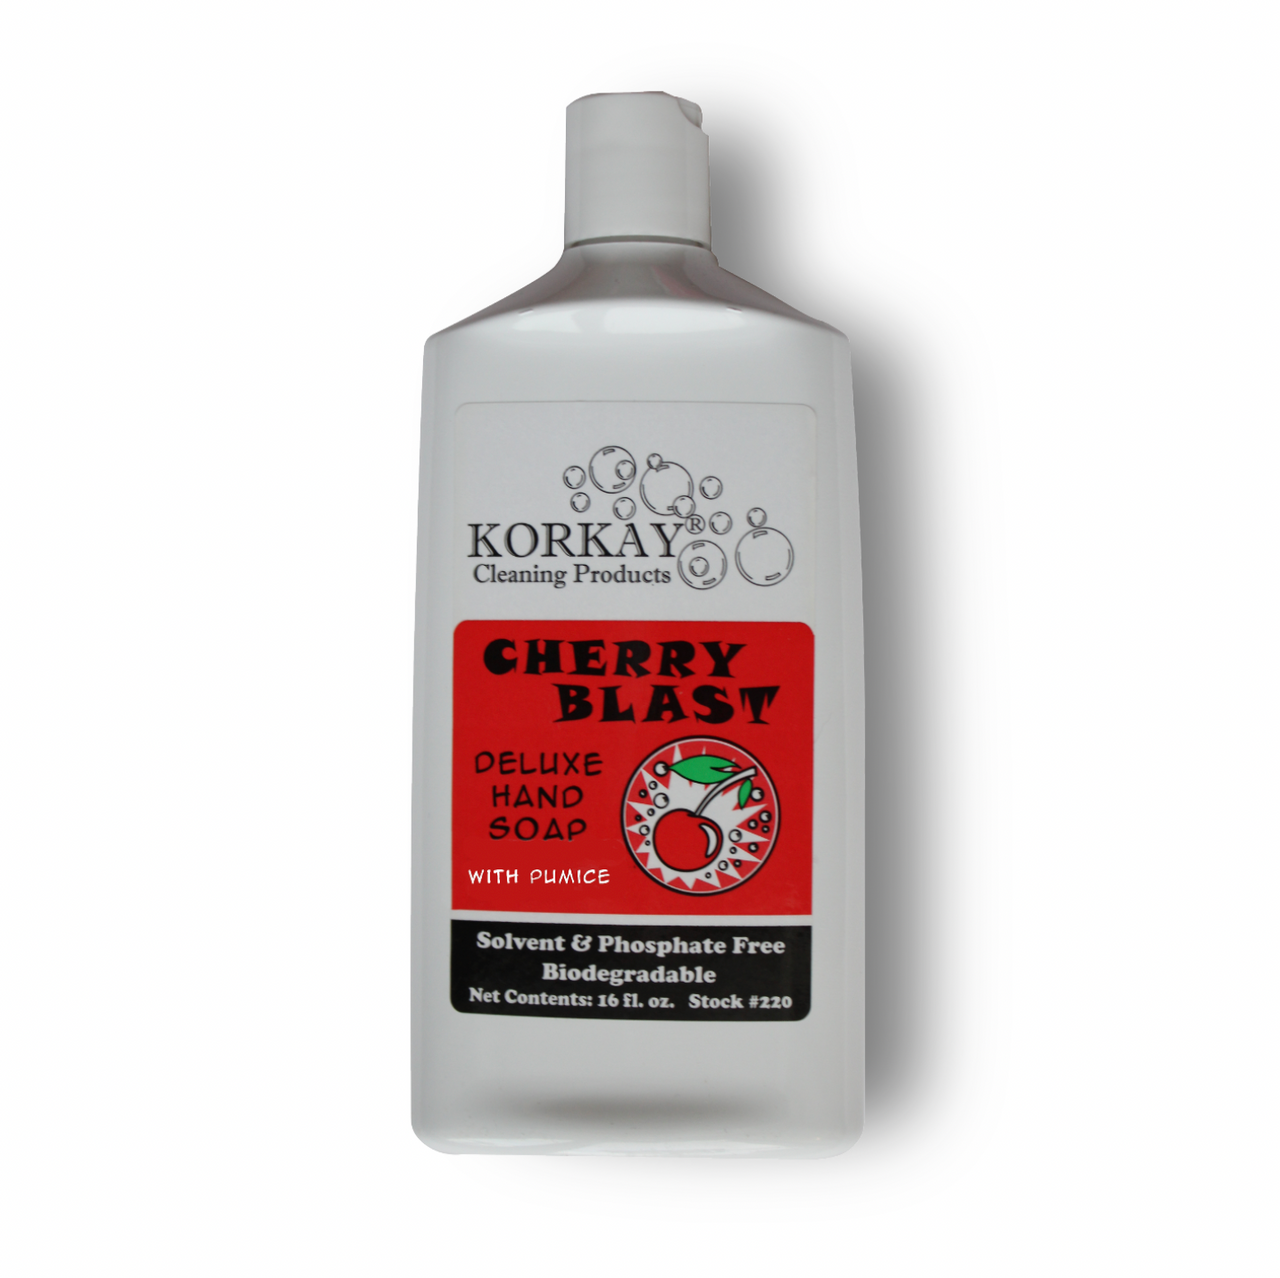 Korkay Cherry Blast Hand Soap - With Pumice